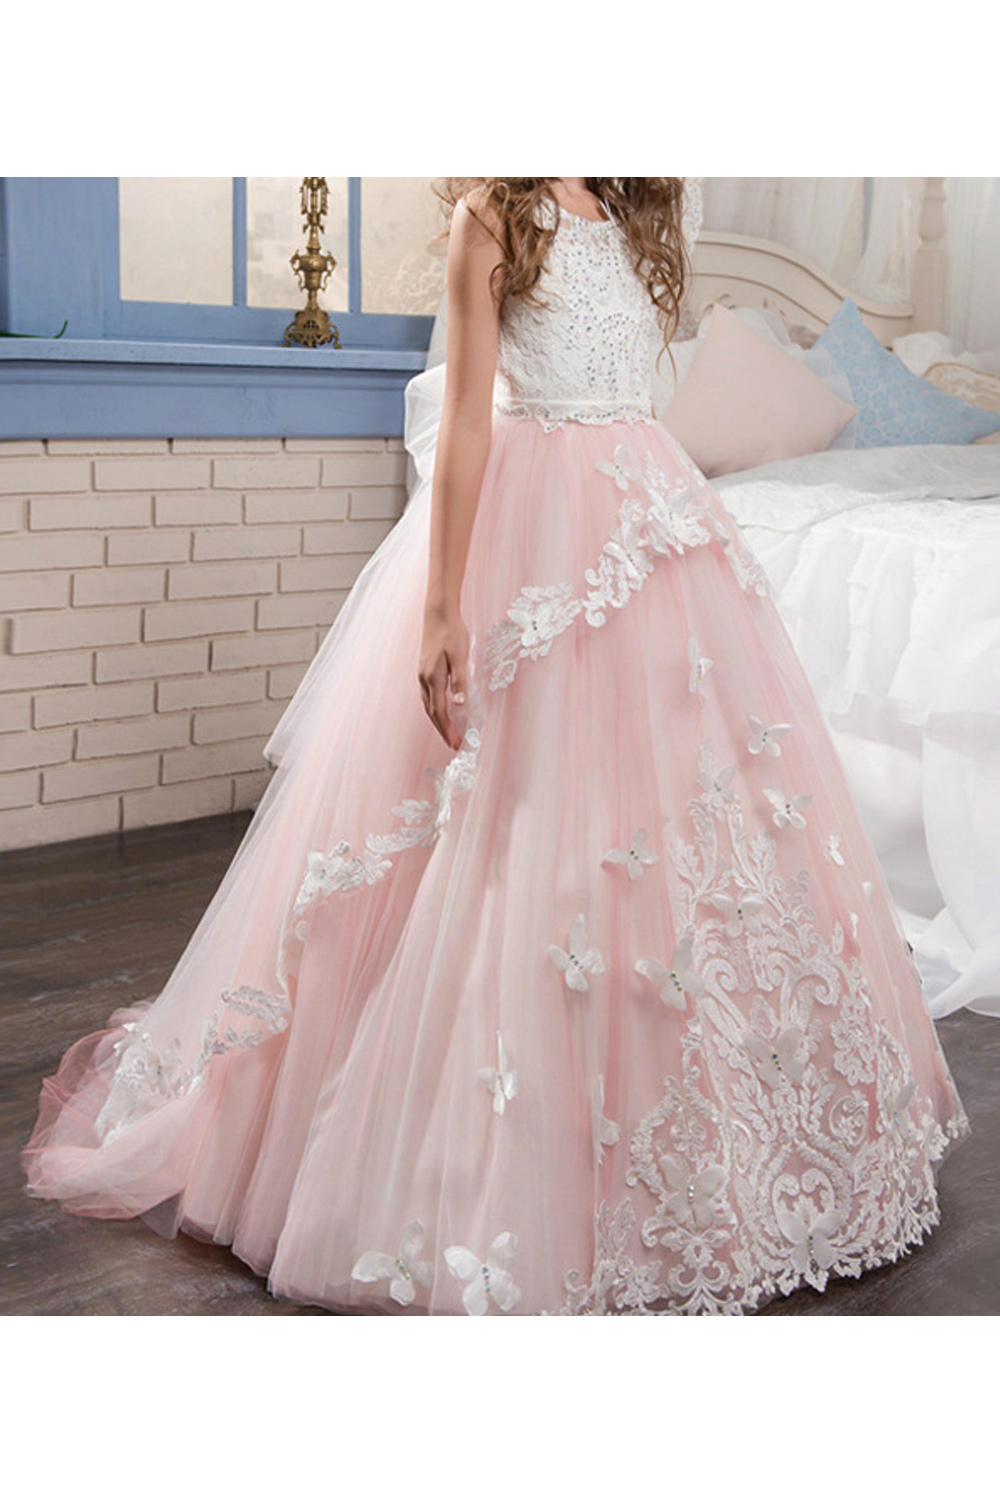 KettyMore Kid Girl Elegant Flower Lace Long Sleeve Wedding Dress